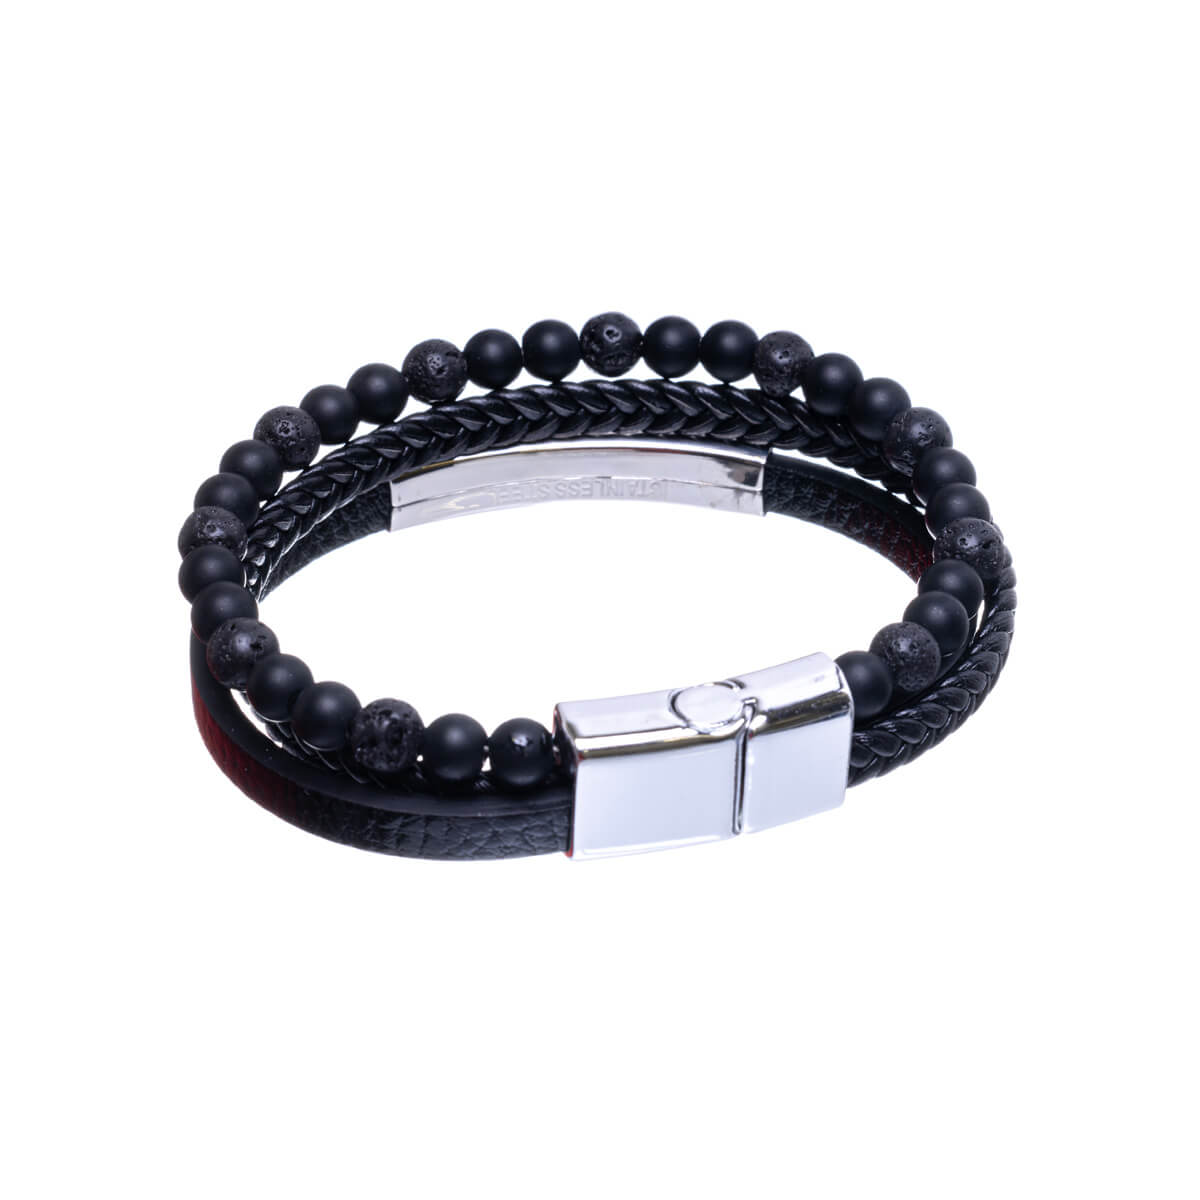 Three row bracelet with beads (Steel 316L)